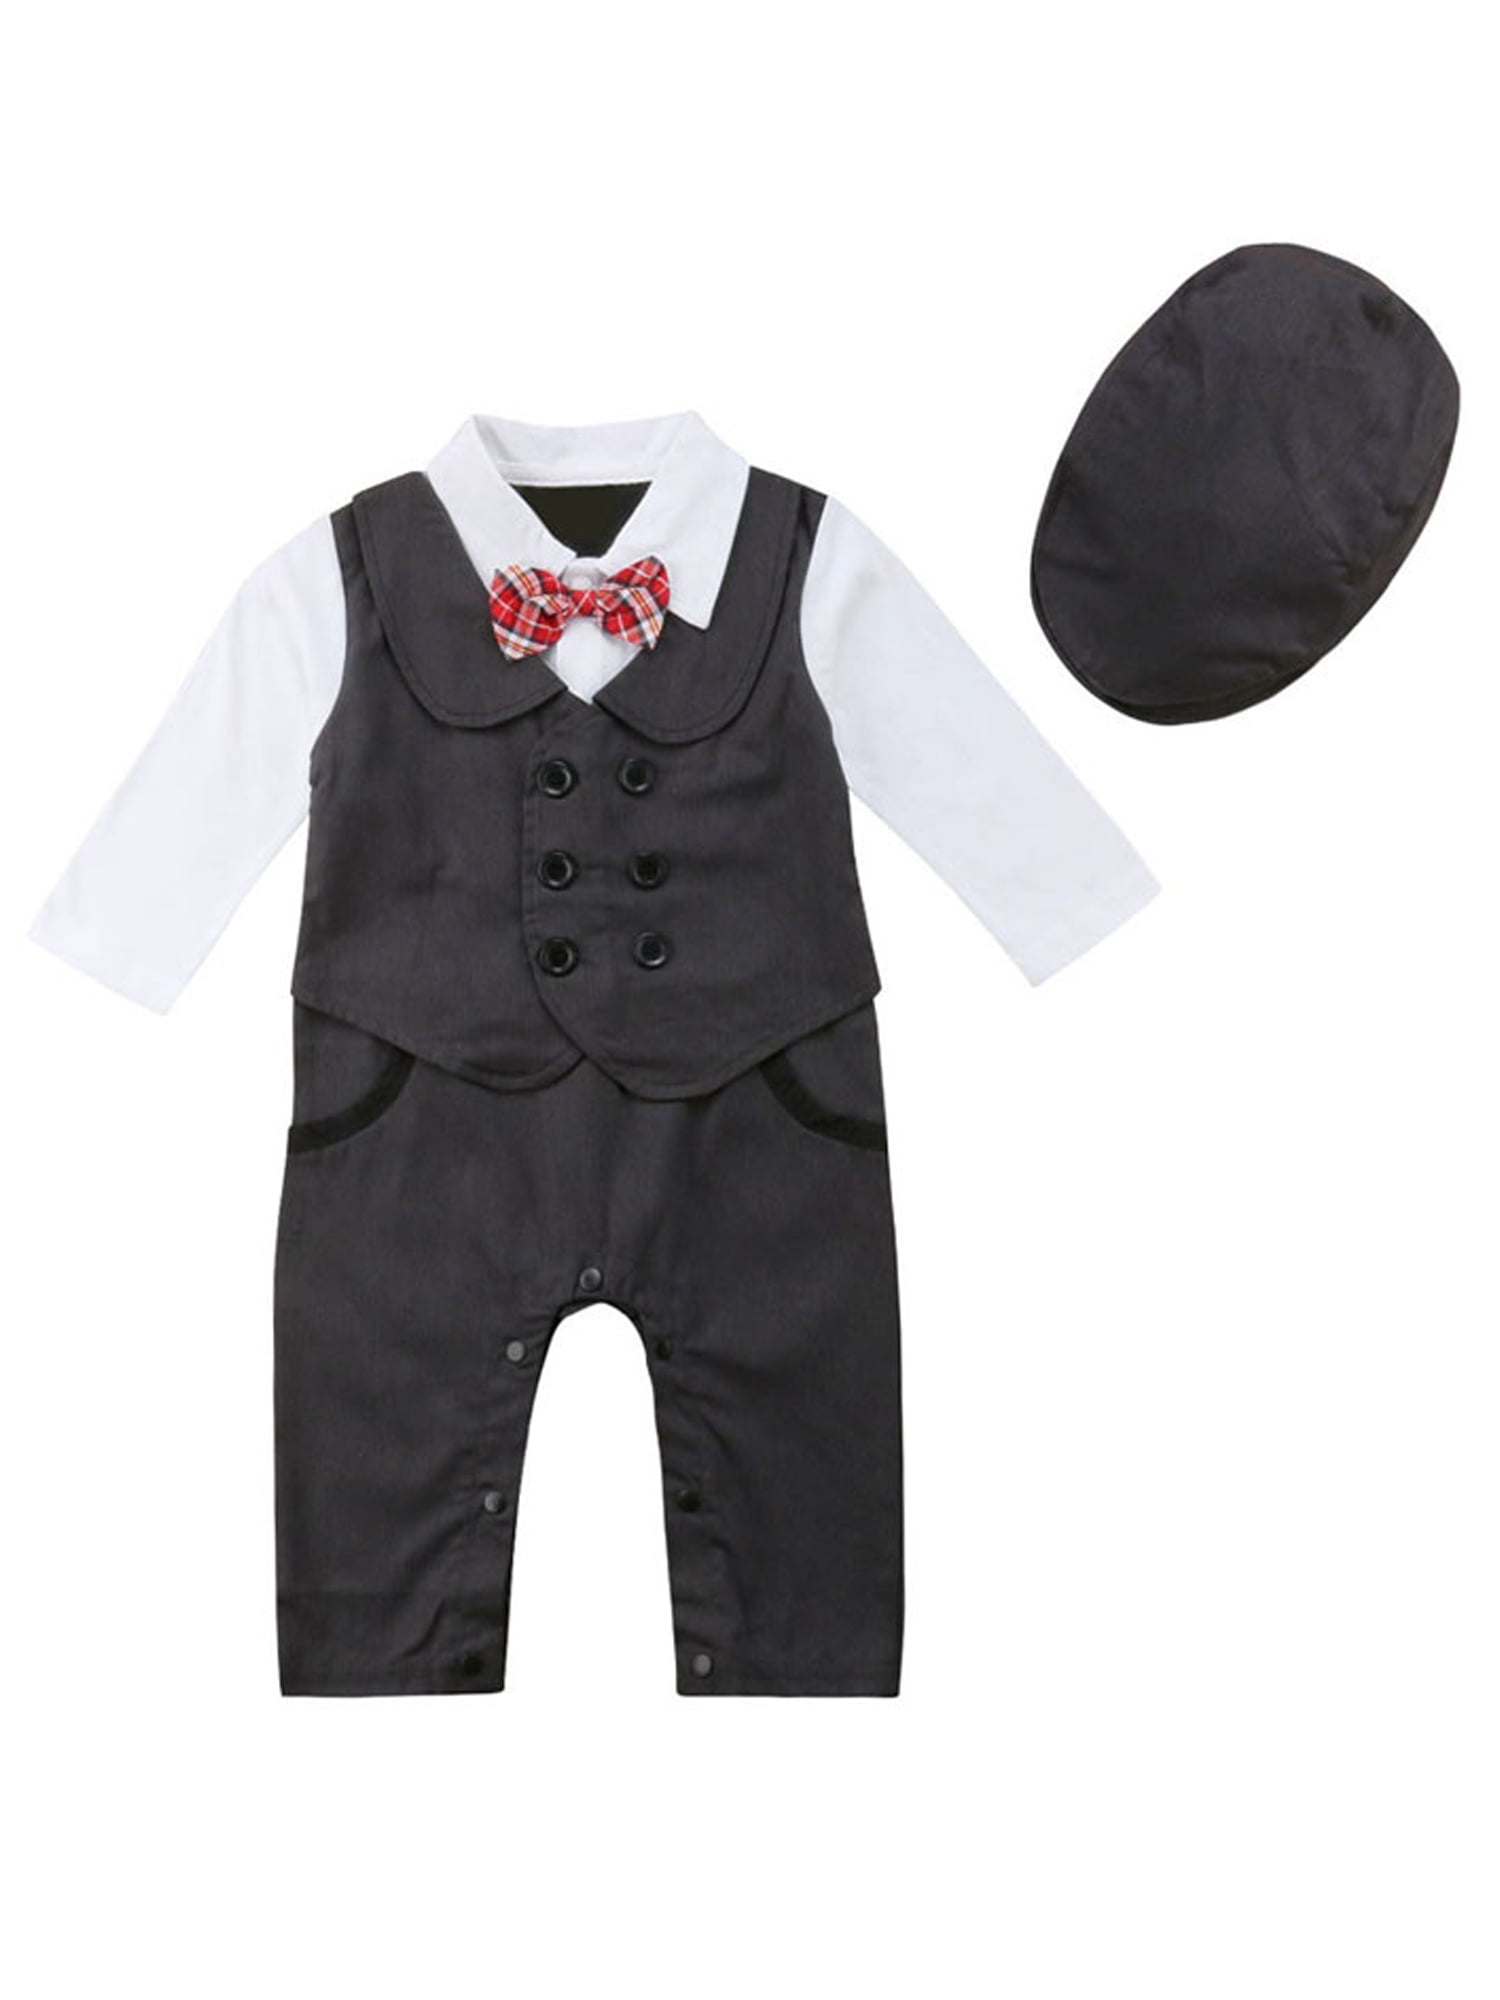 FYMNSI Baby Boy Gentleman Romper Formal Suit One-Piece Wedding Tuxedo Jumpsuit Short Sleeve Cotton Playsuit for 0-18 Months 